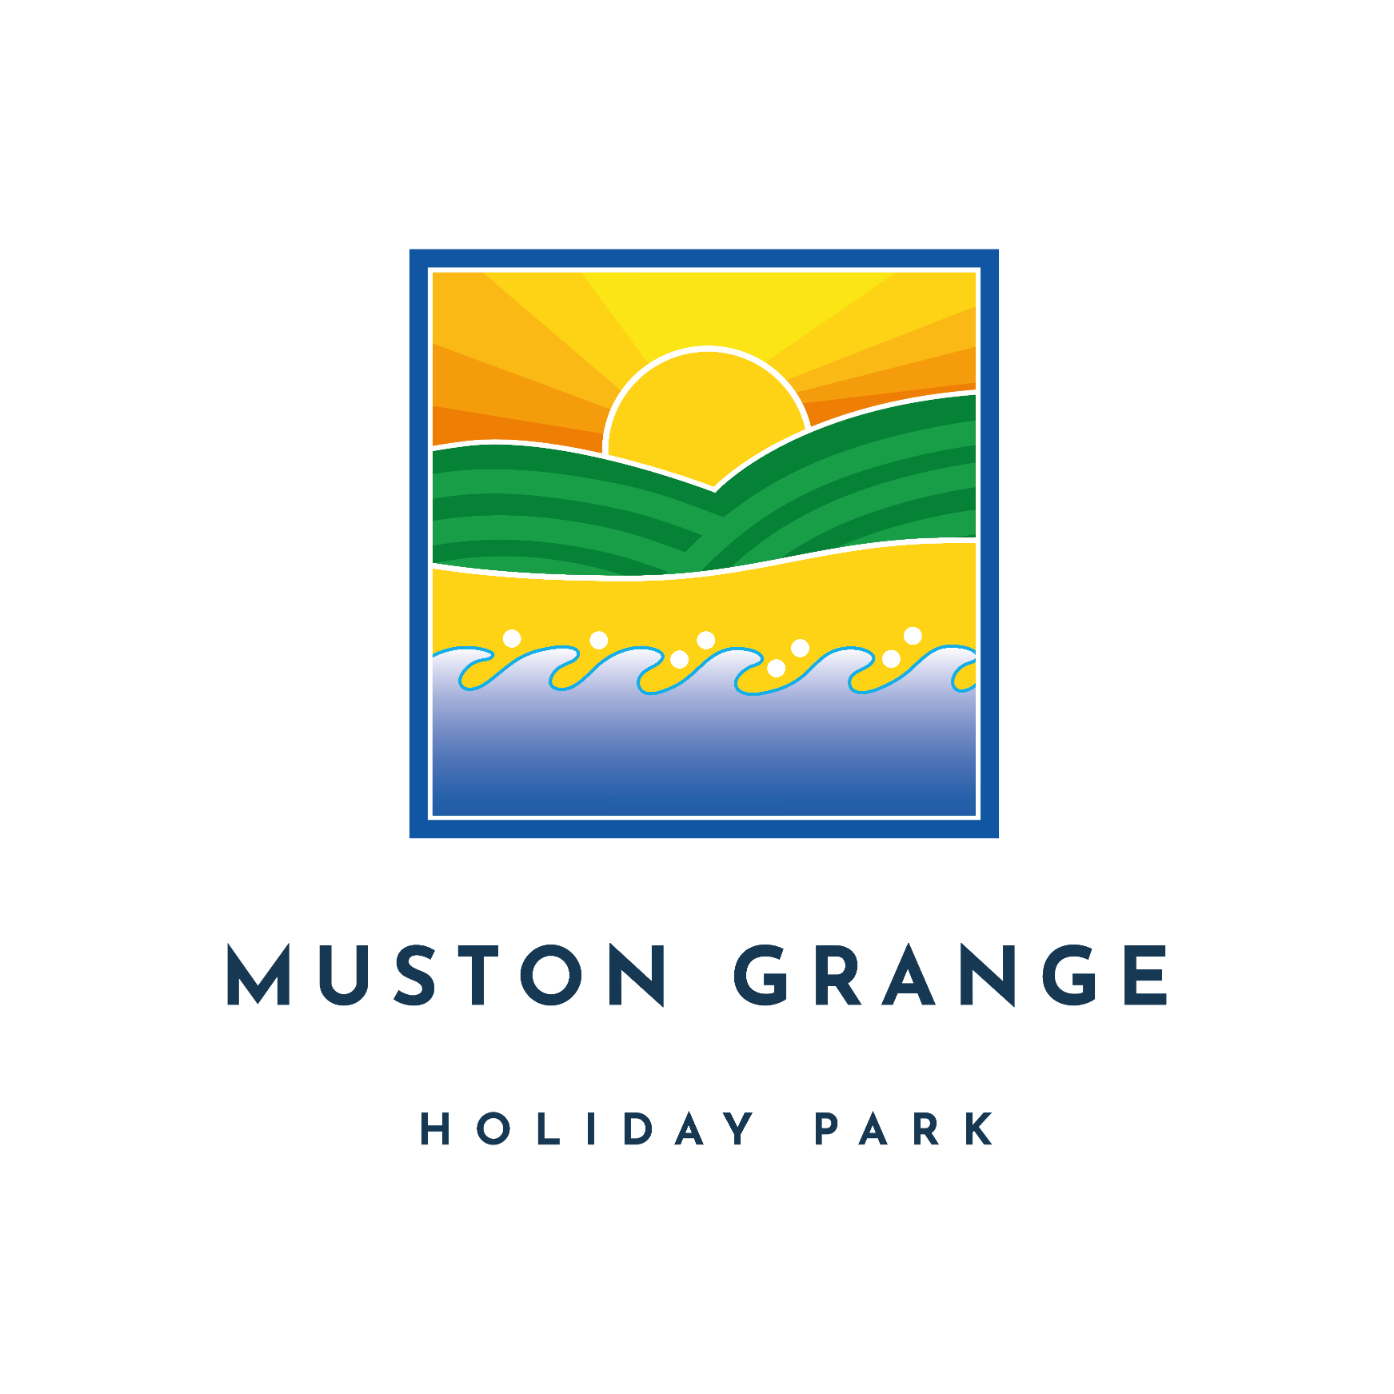 Muston Grange Holiday Park